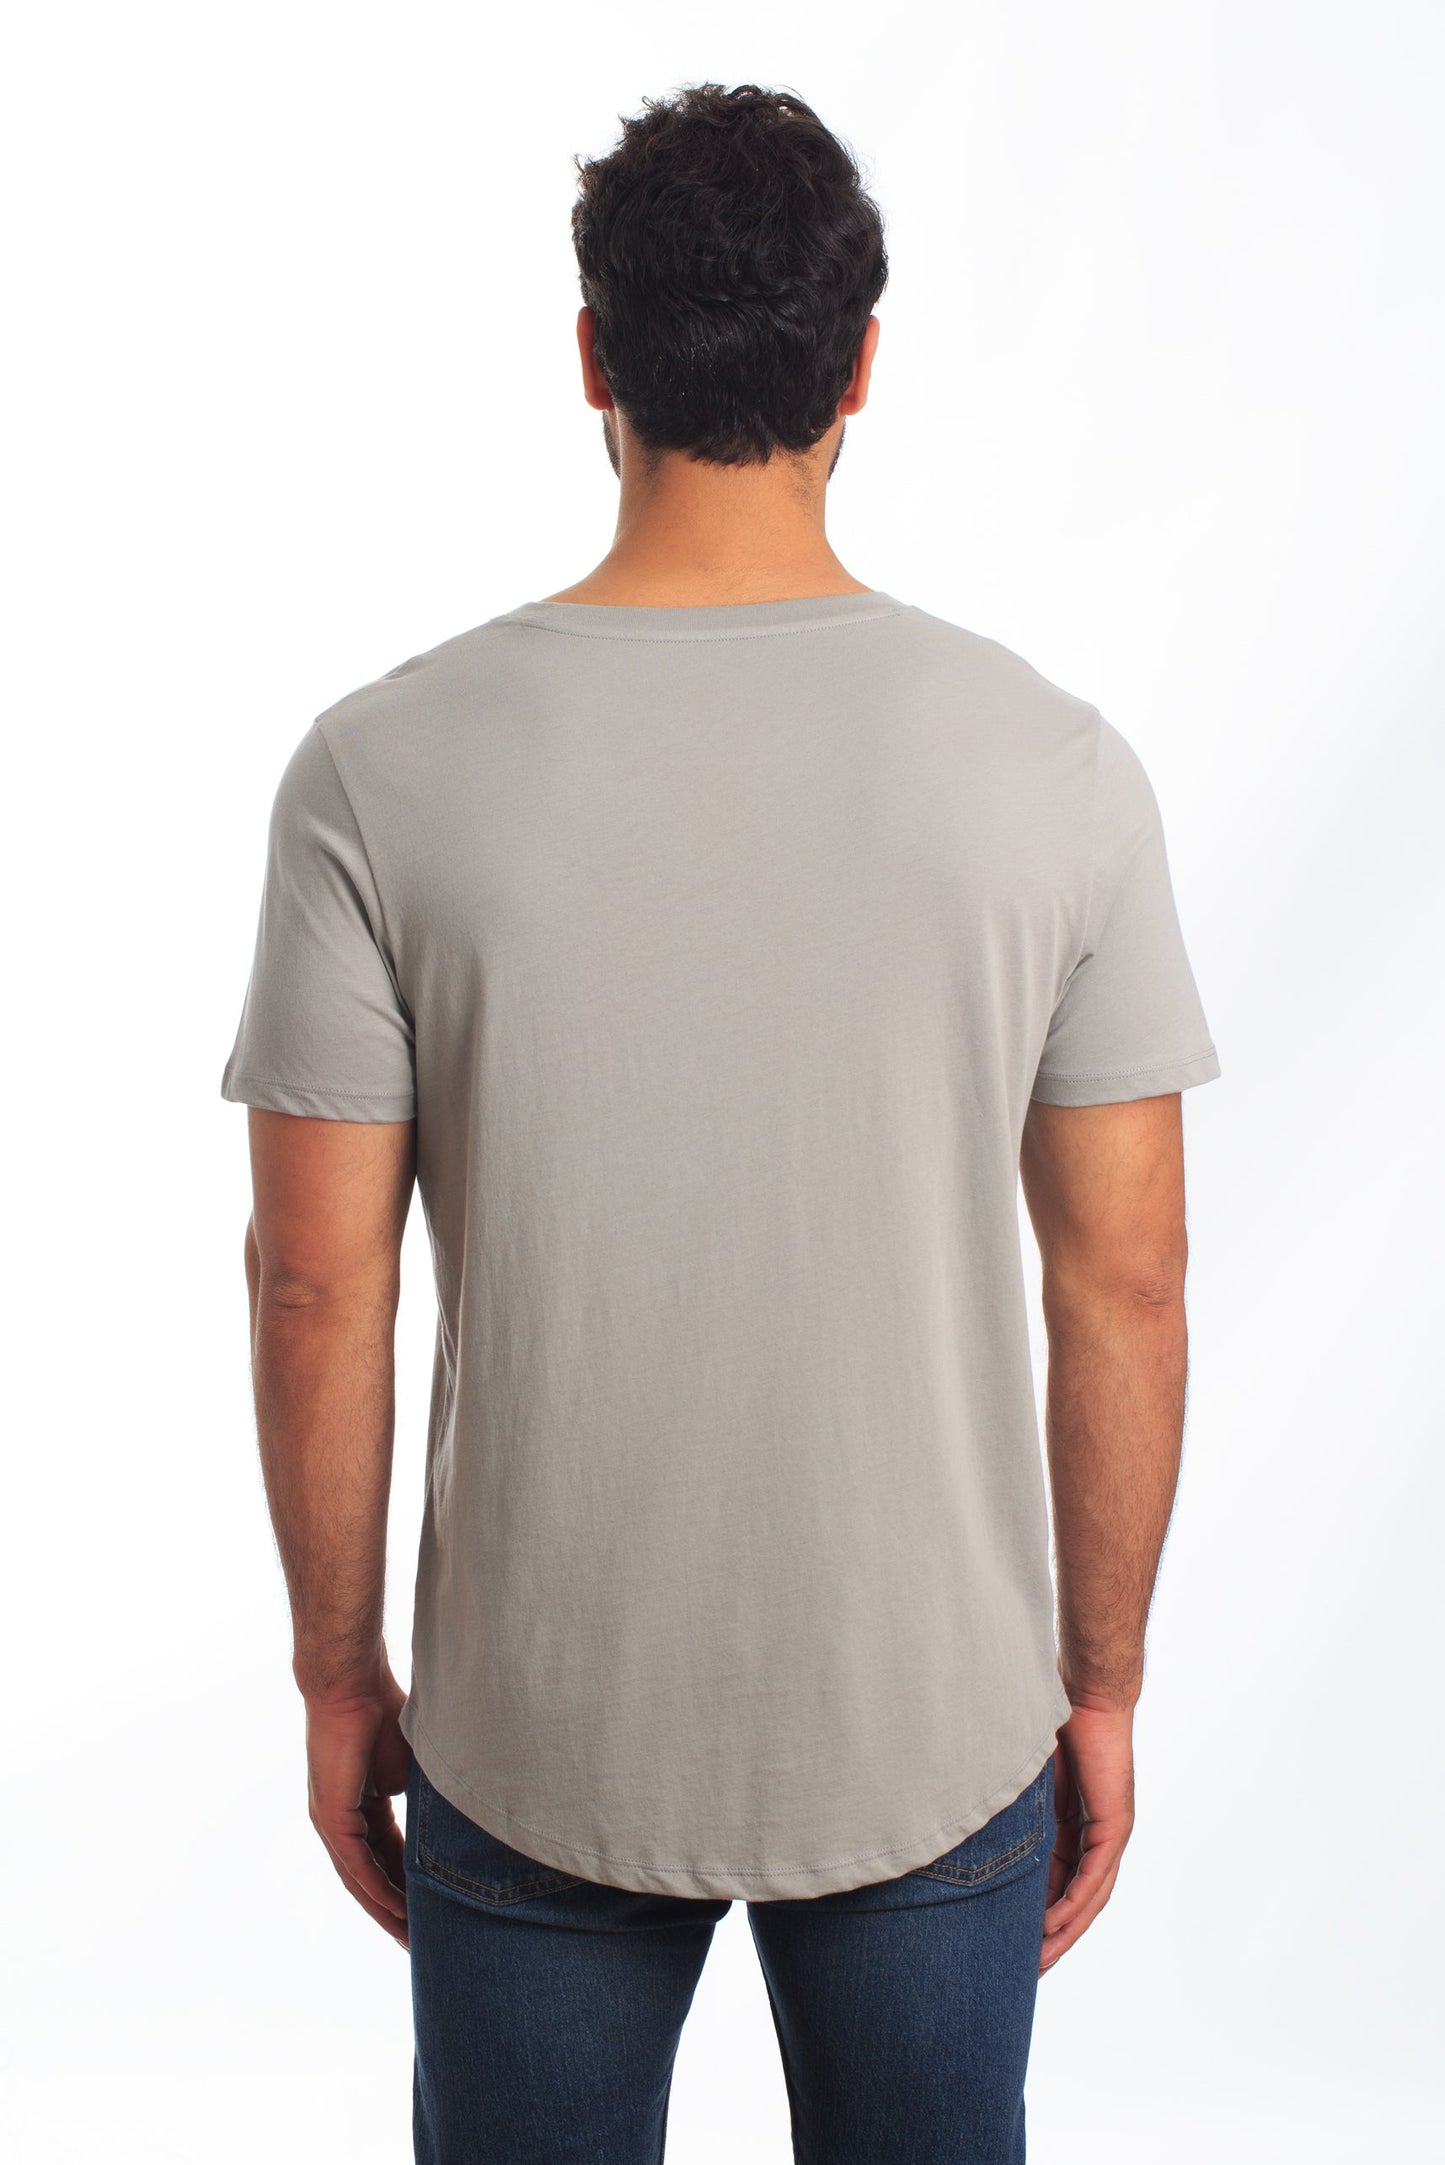 Grey T-Shirt TEE-122 Back